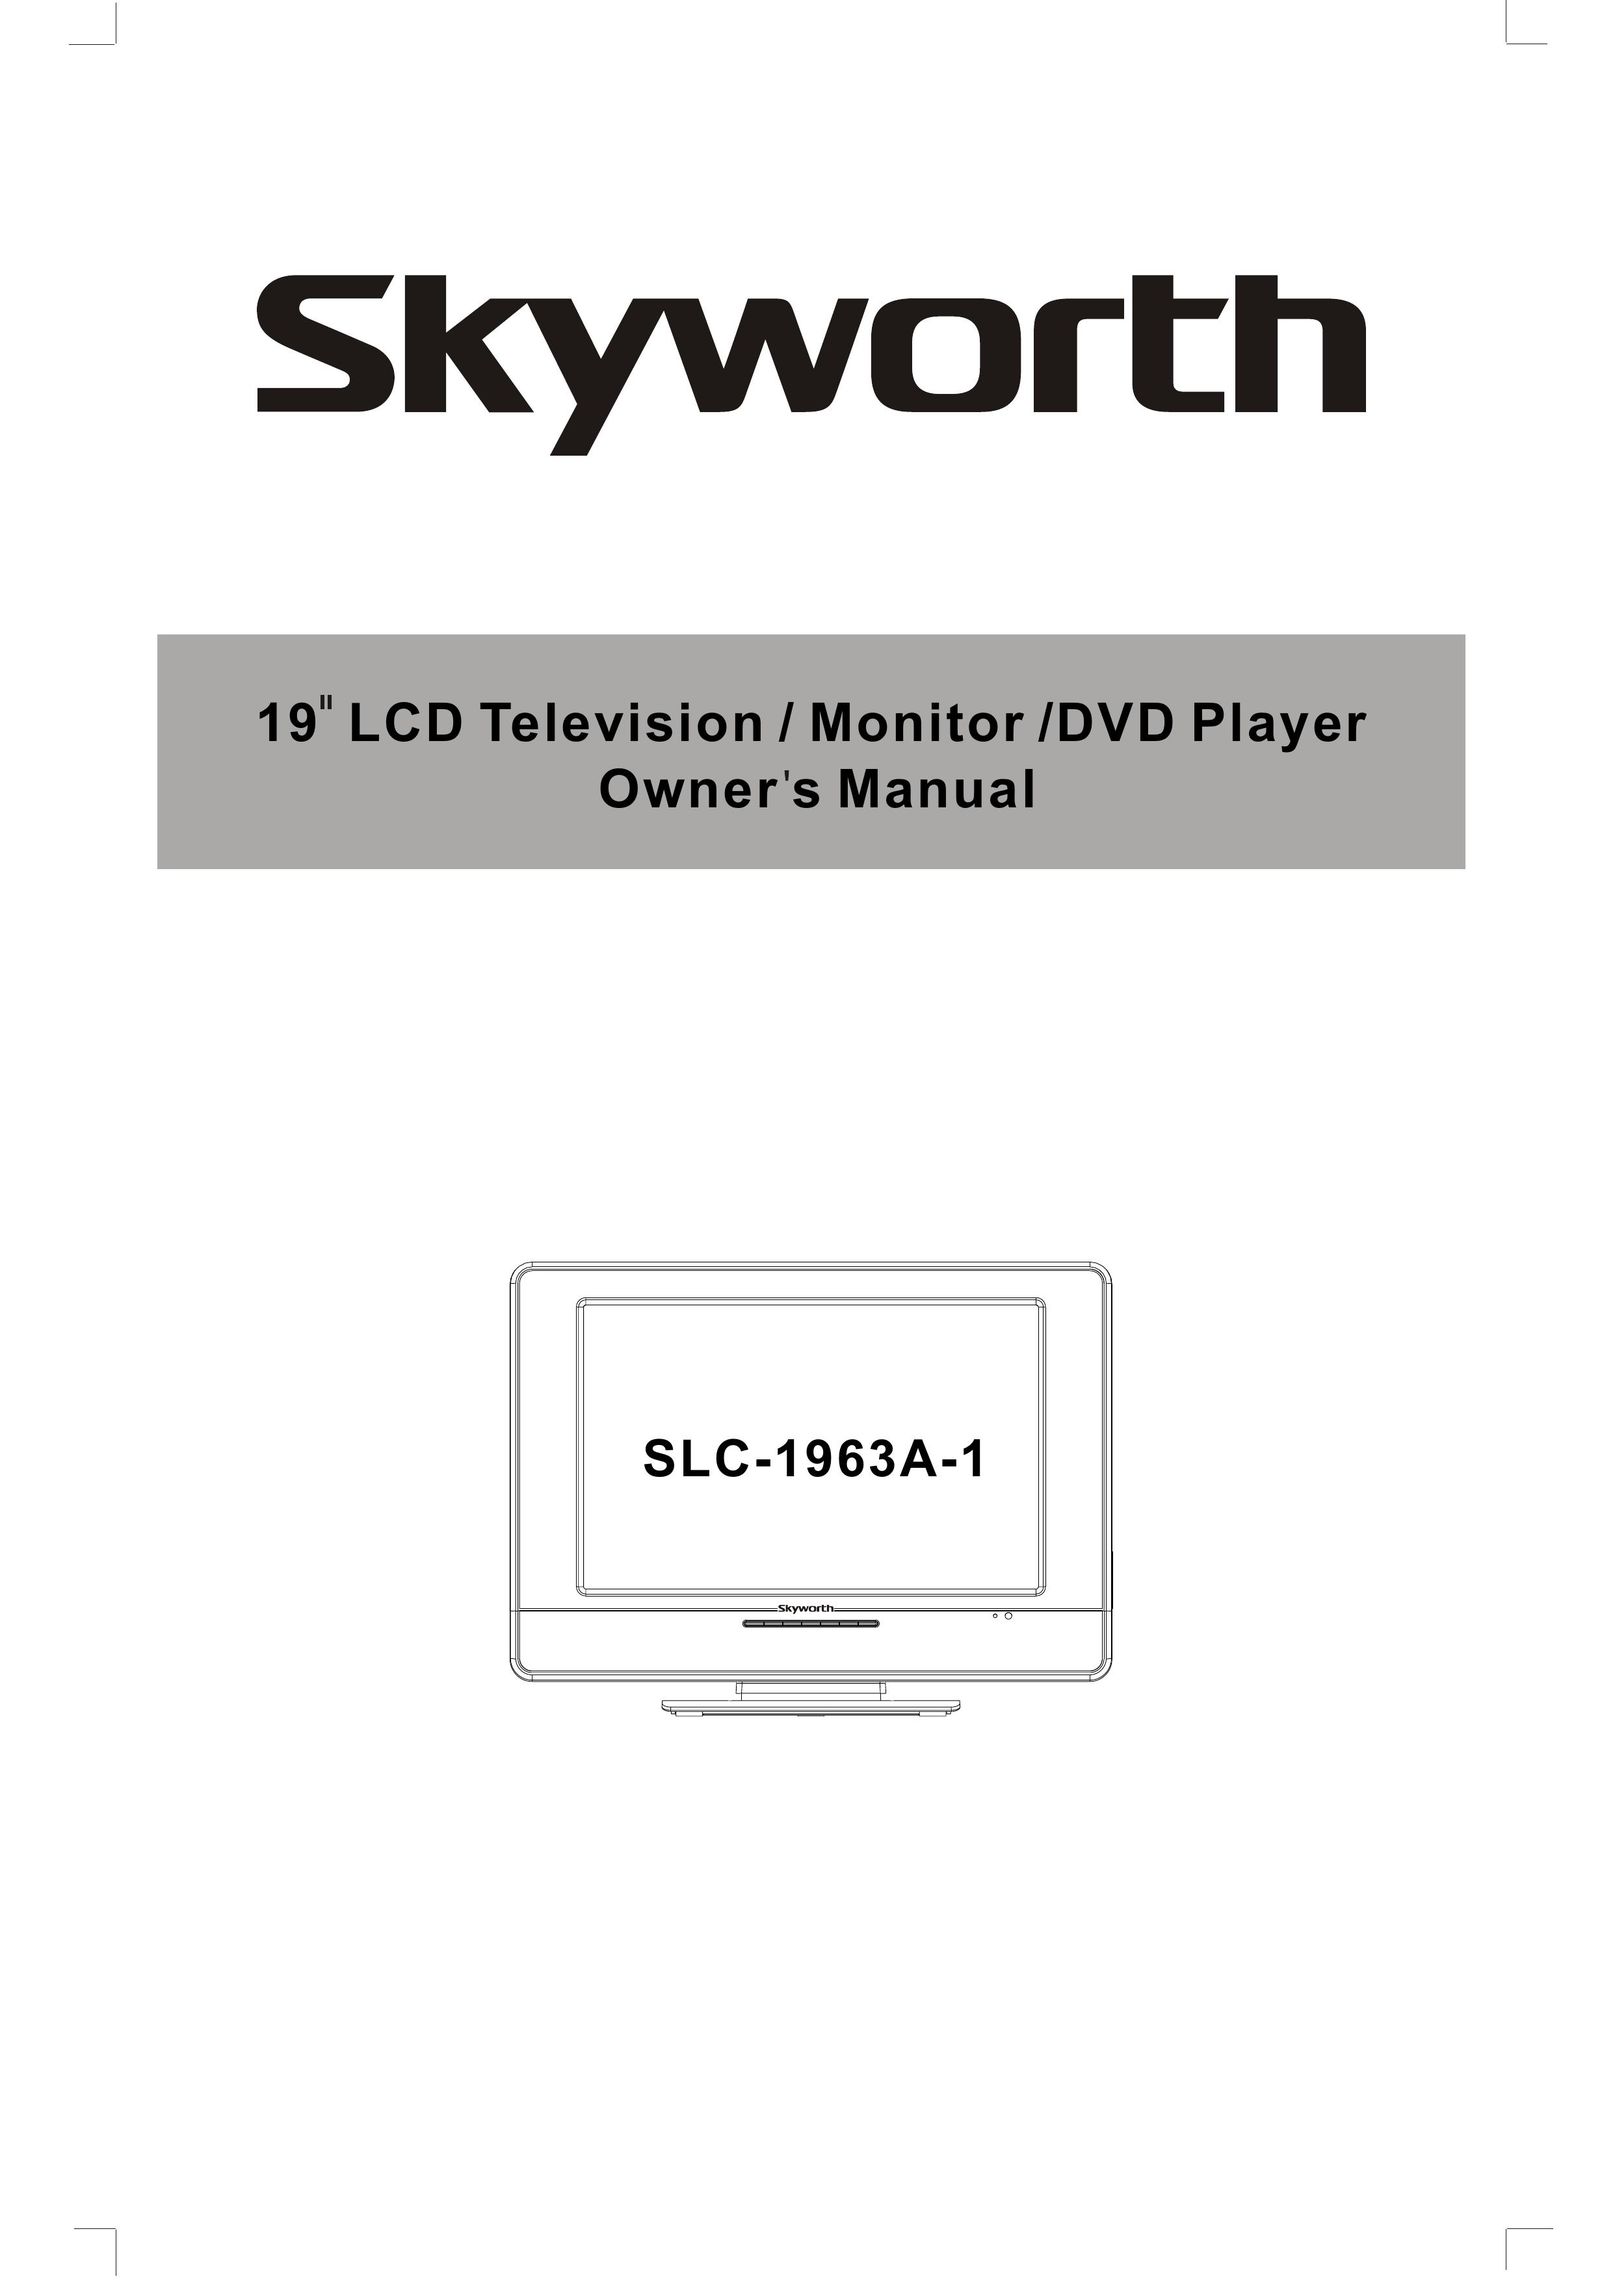 Skyworth SLC-1963A-1 Flat Panel Television User Manual